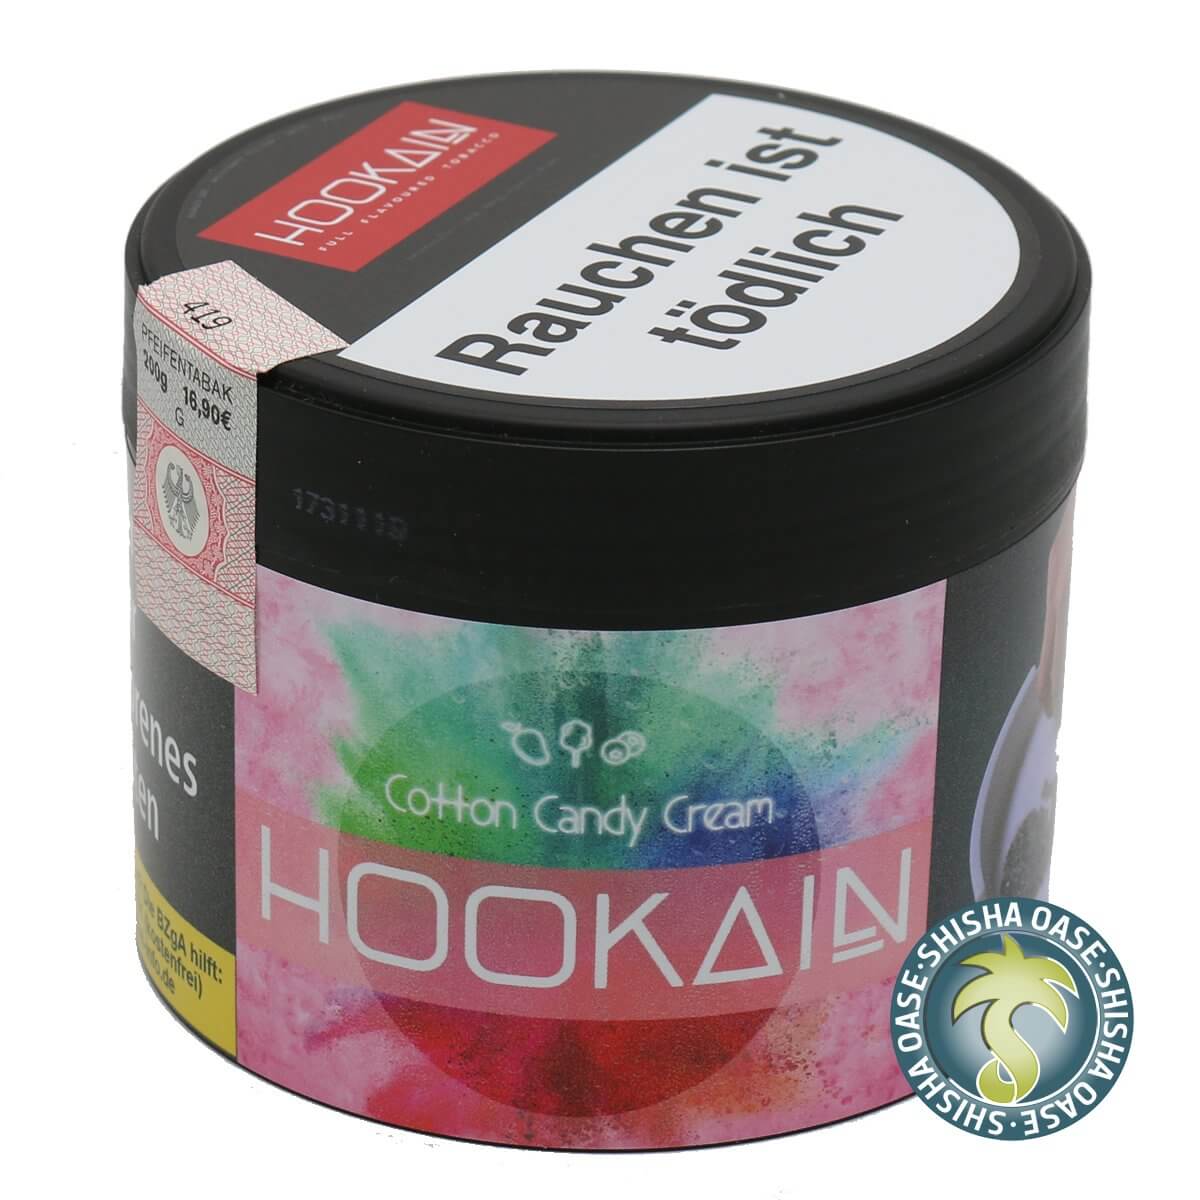 Hookain Tabak Cotton Candy Dream 200g